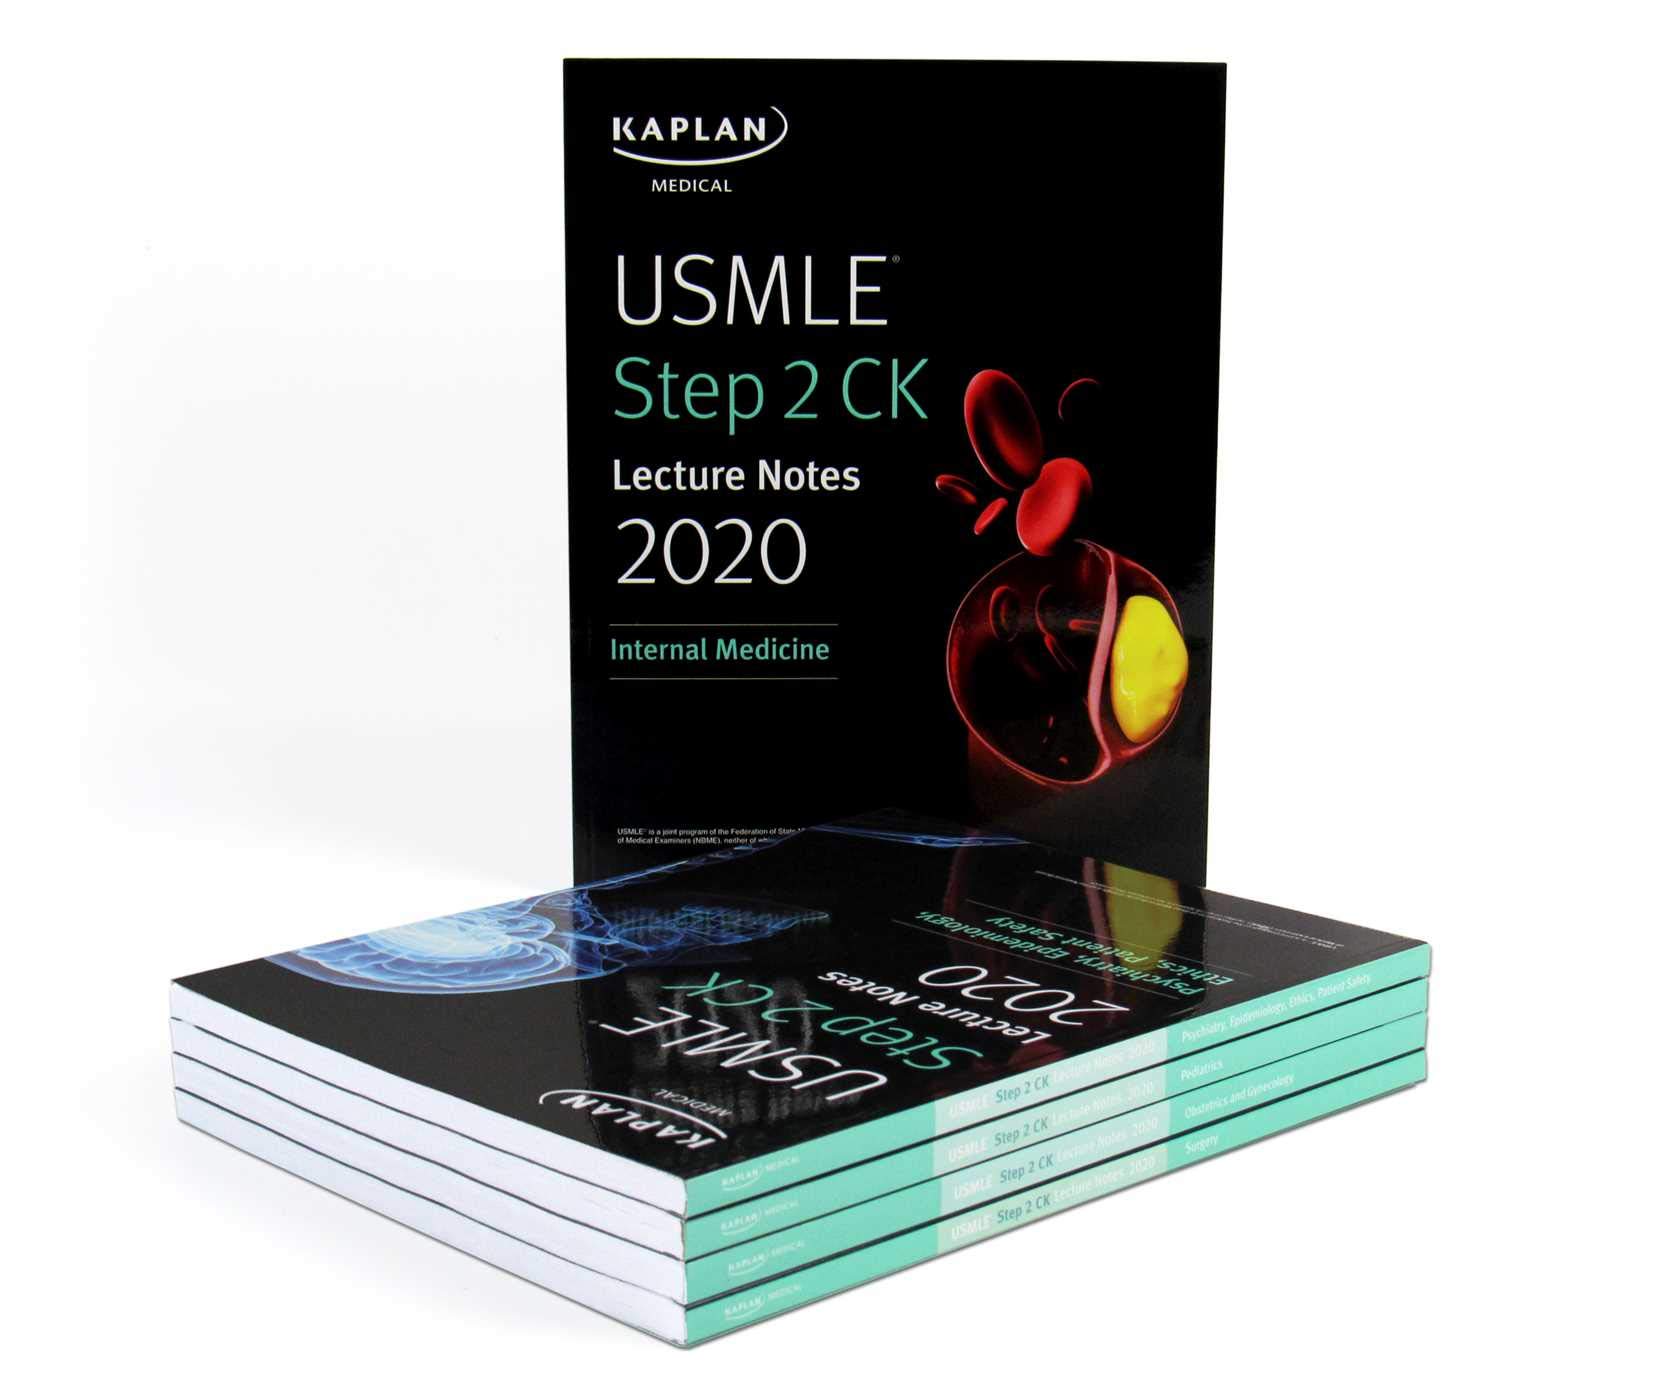 usmle-step-2-ck-lecture-notes-2020-5-book-set-kaplan-test-prep